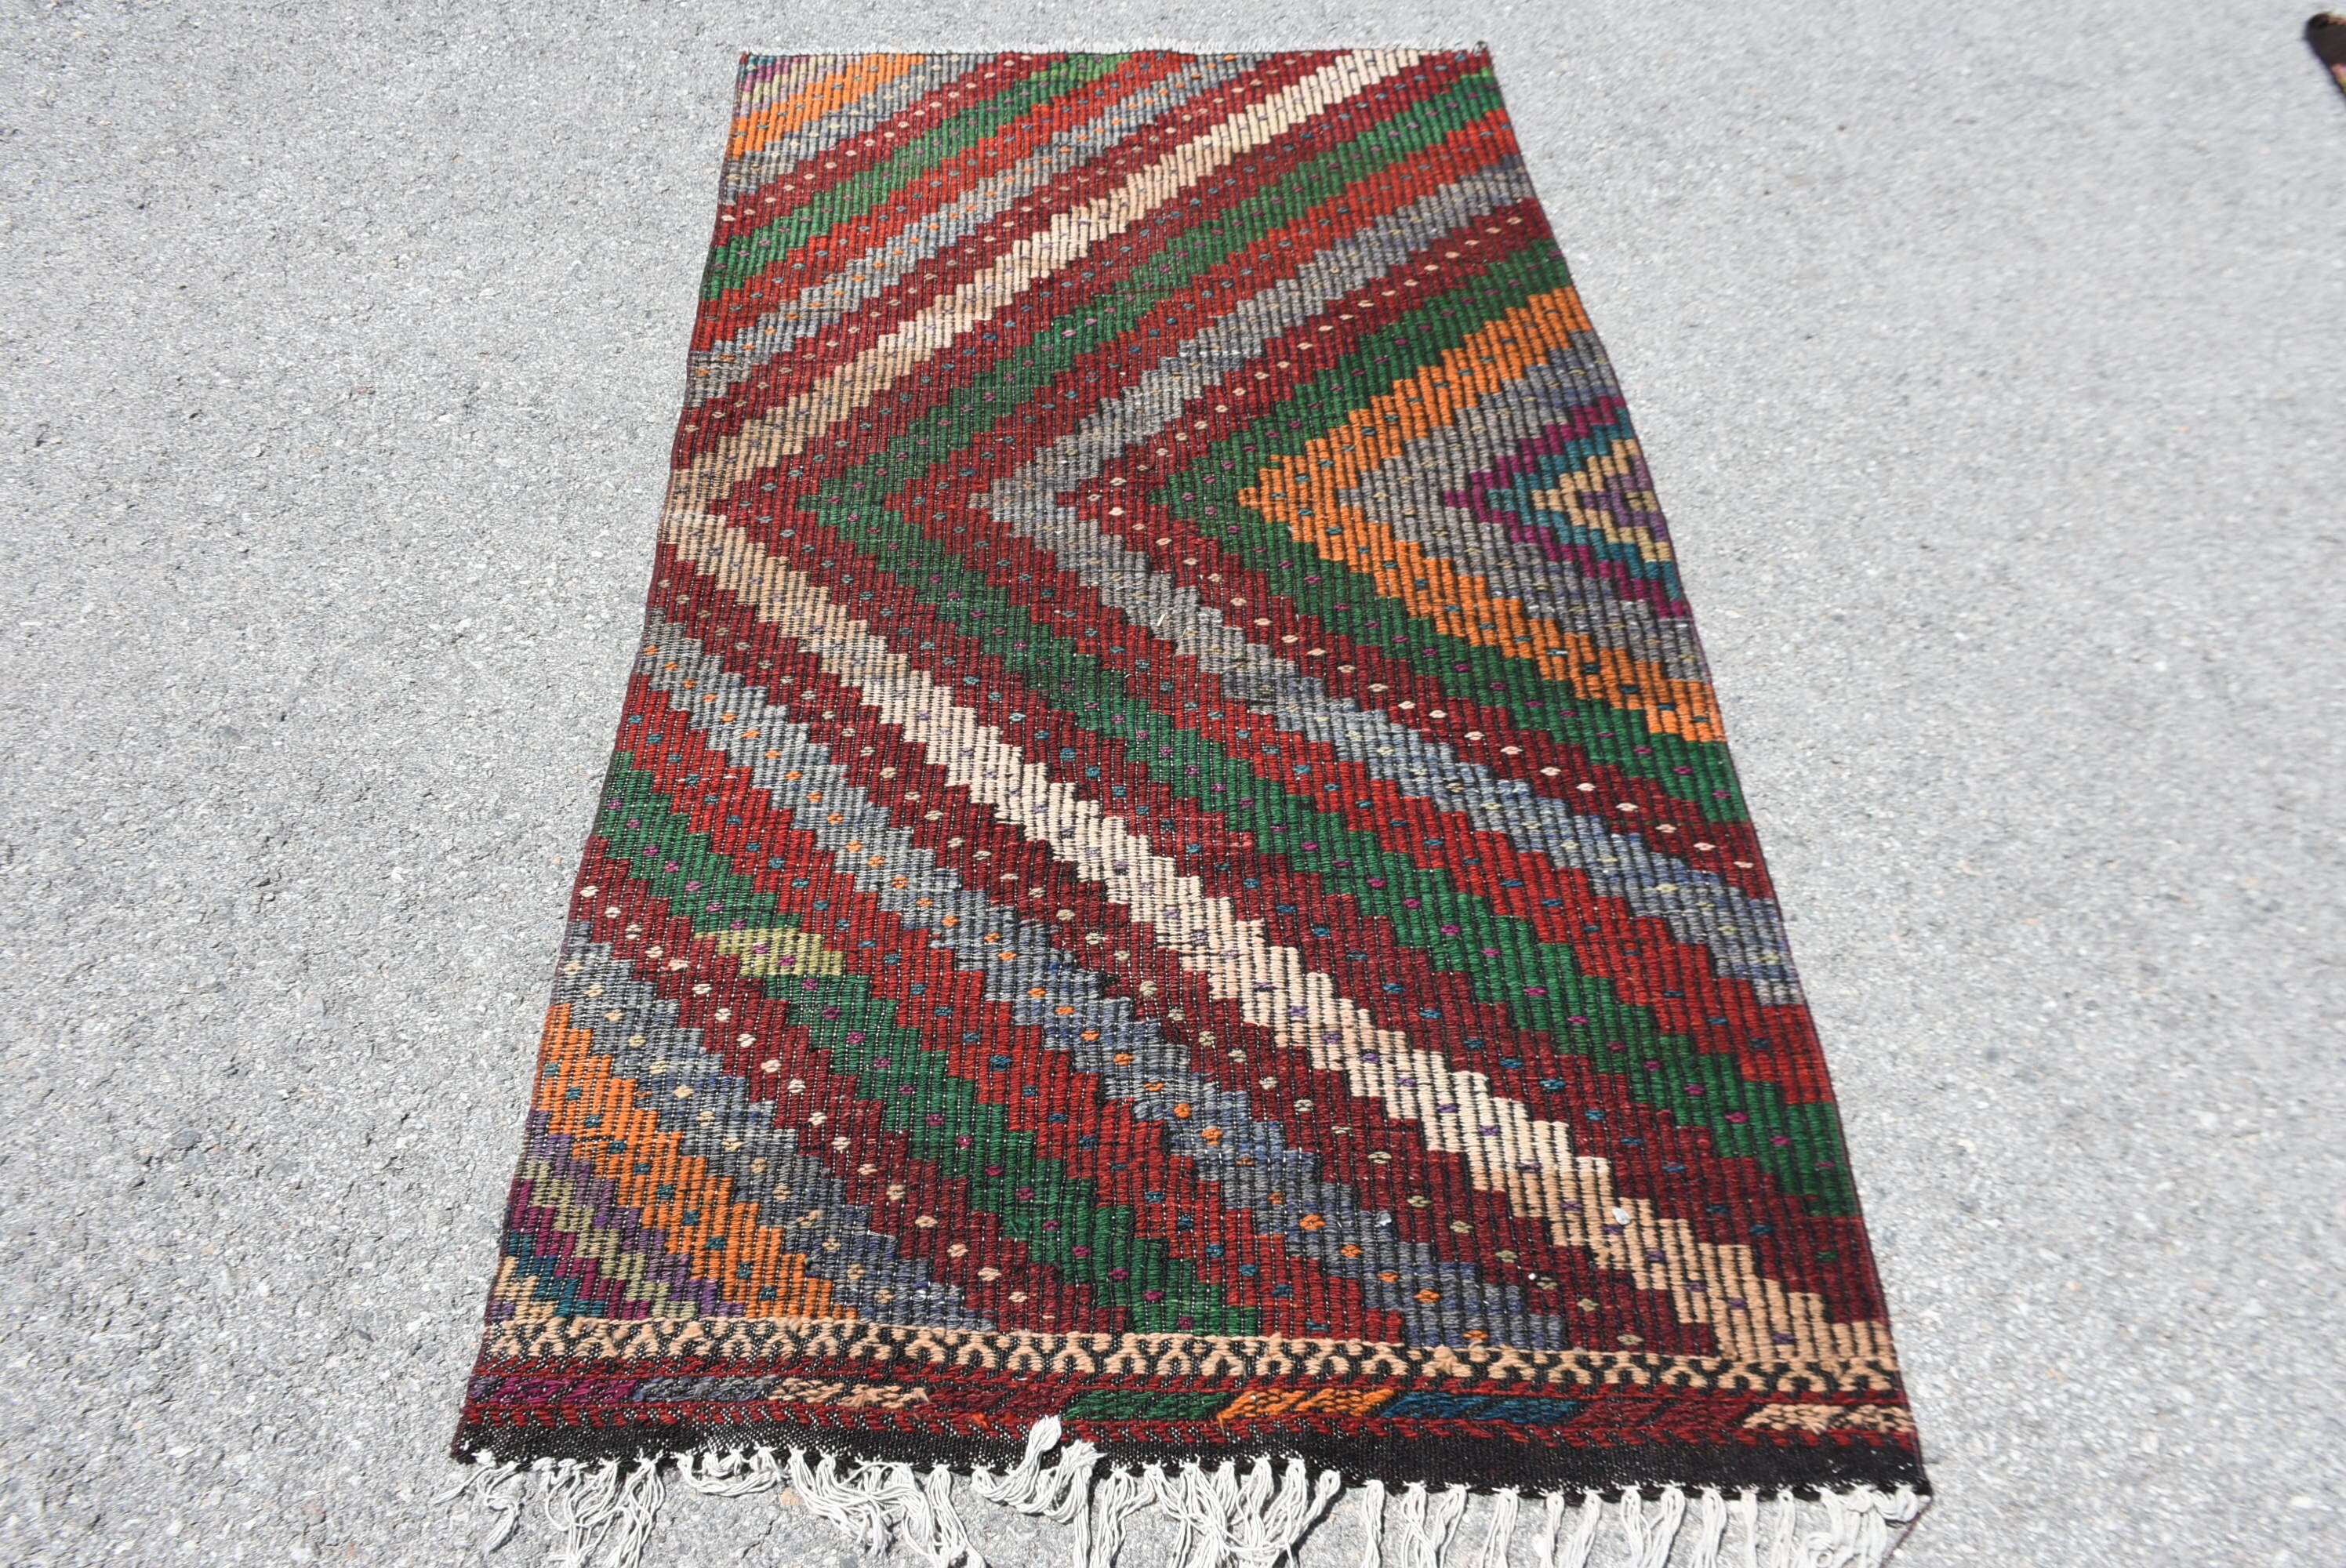 Turkish Rugs, Vintage Rug, Wool Rug, Kilim, Moroccan Rug, Office Rug, Kitchen Rugs, Red Anatolian Rugs, Bedroom Rug, 3.2x6.3 ft Accent Rug